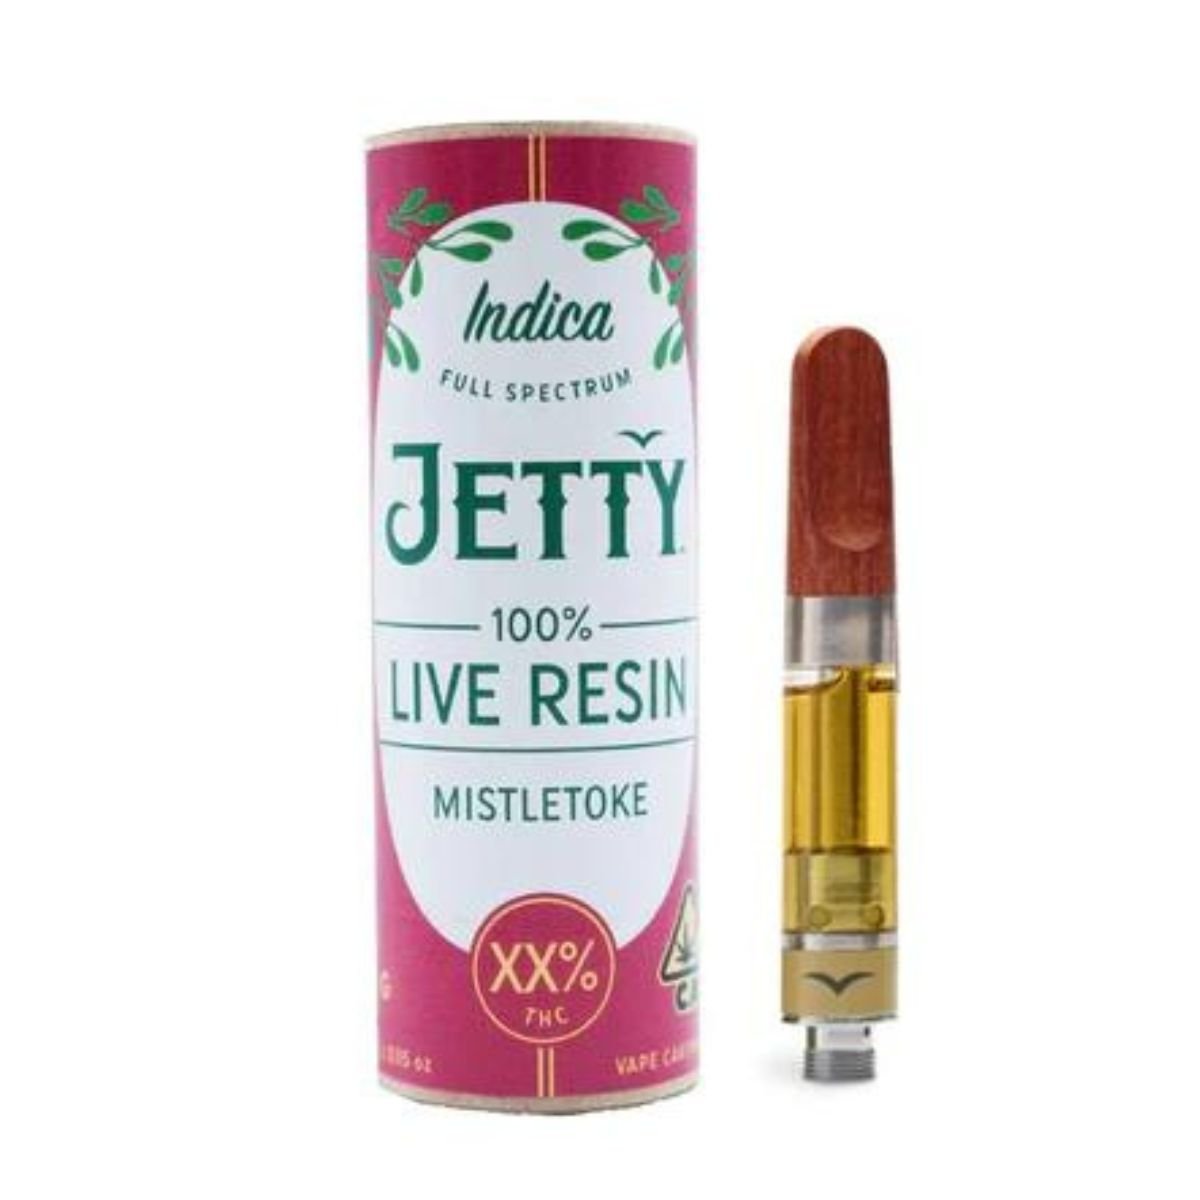 Jetty+Unrefined+Live+Resin+Cartridge